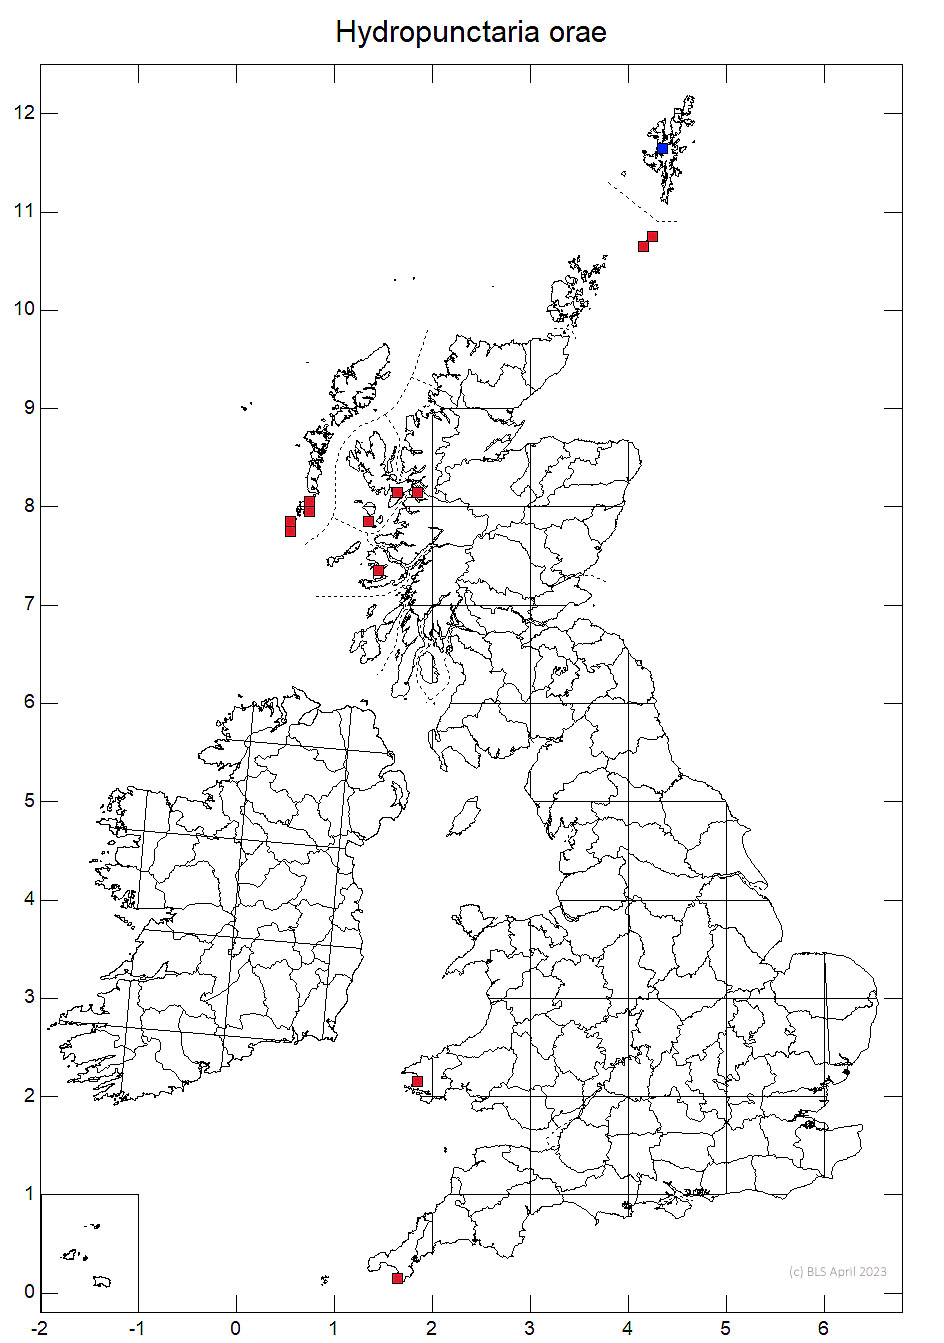 Hydropunctaria orae 10km sq distribution map